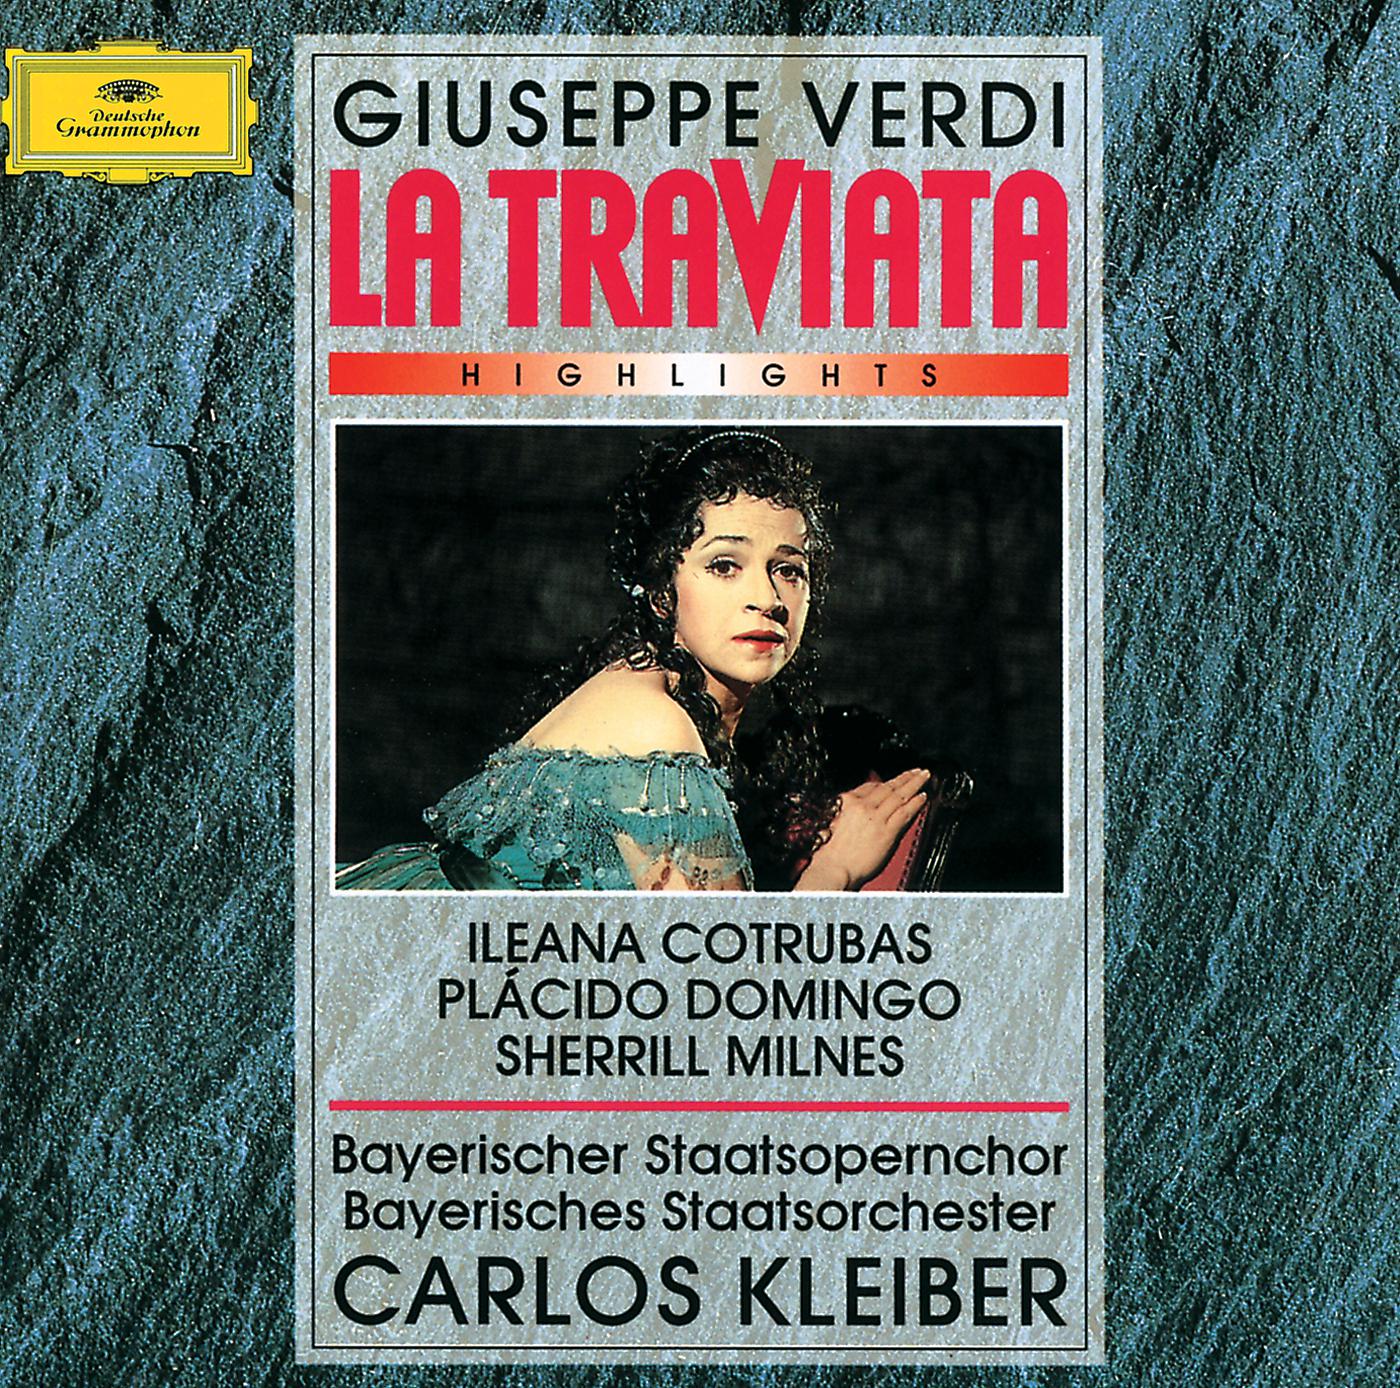 Постер альбома Verdi: La Traviata - Highlights